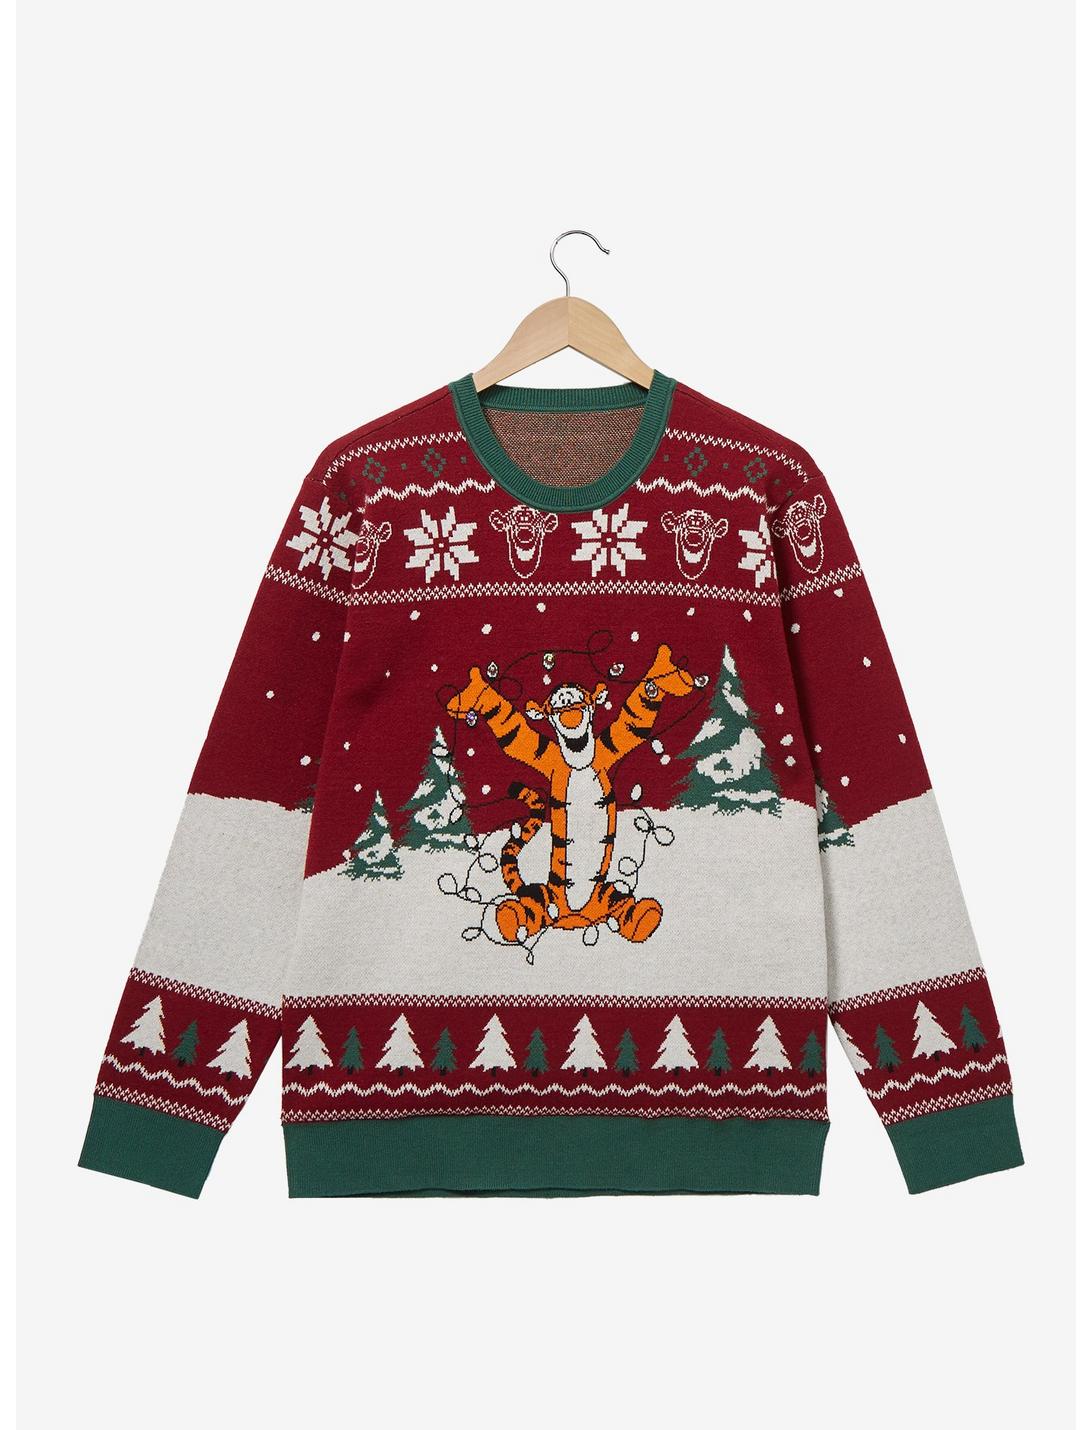 Men's Disney Minnie Mouse Christmas Sweater Style Sweatshirt, Size: XXL, Red